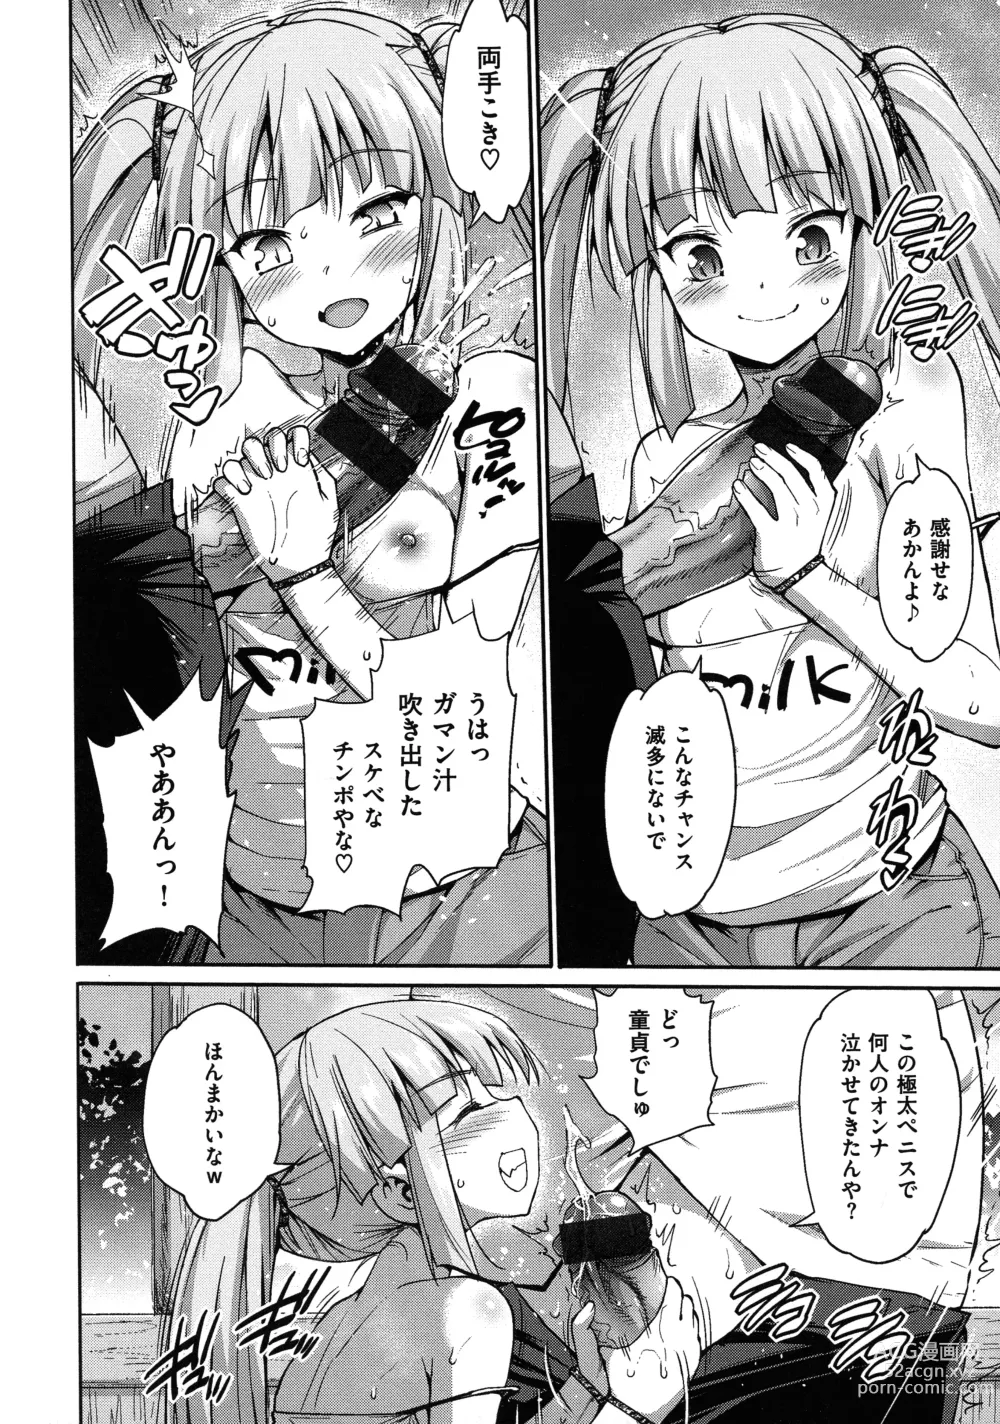 Page 14 of manga Muriyari Hametai